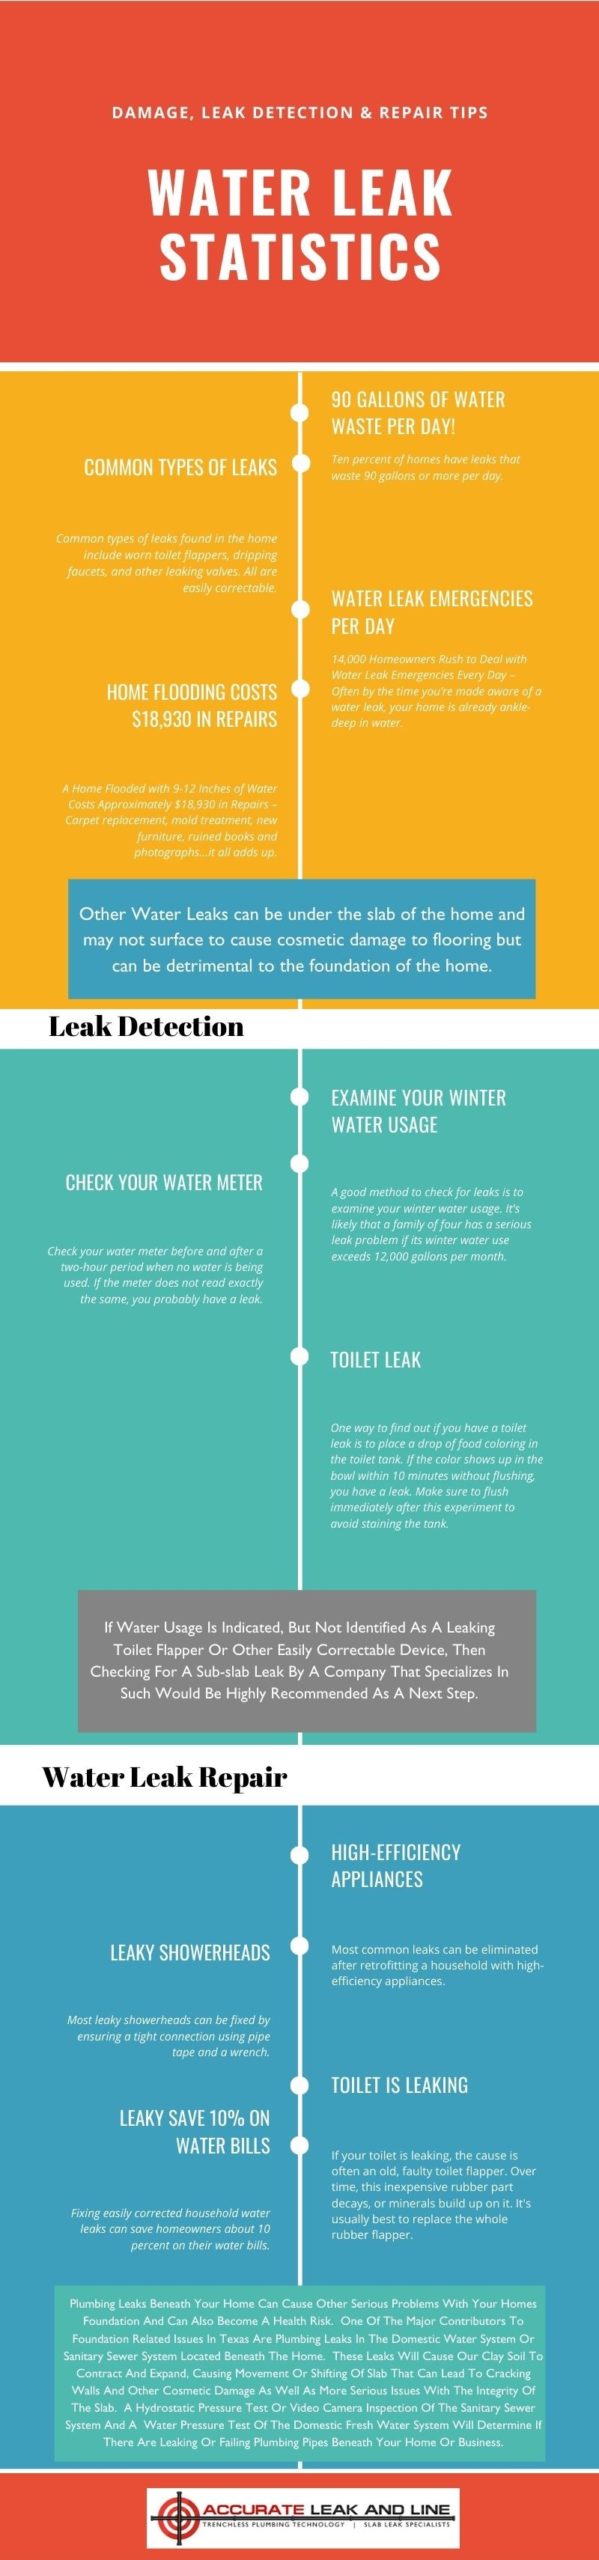 Water Leak Statistics